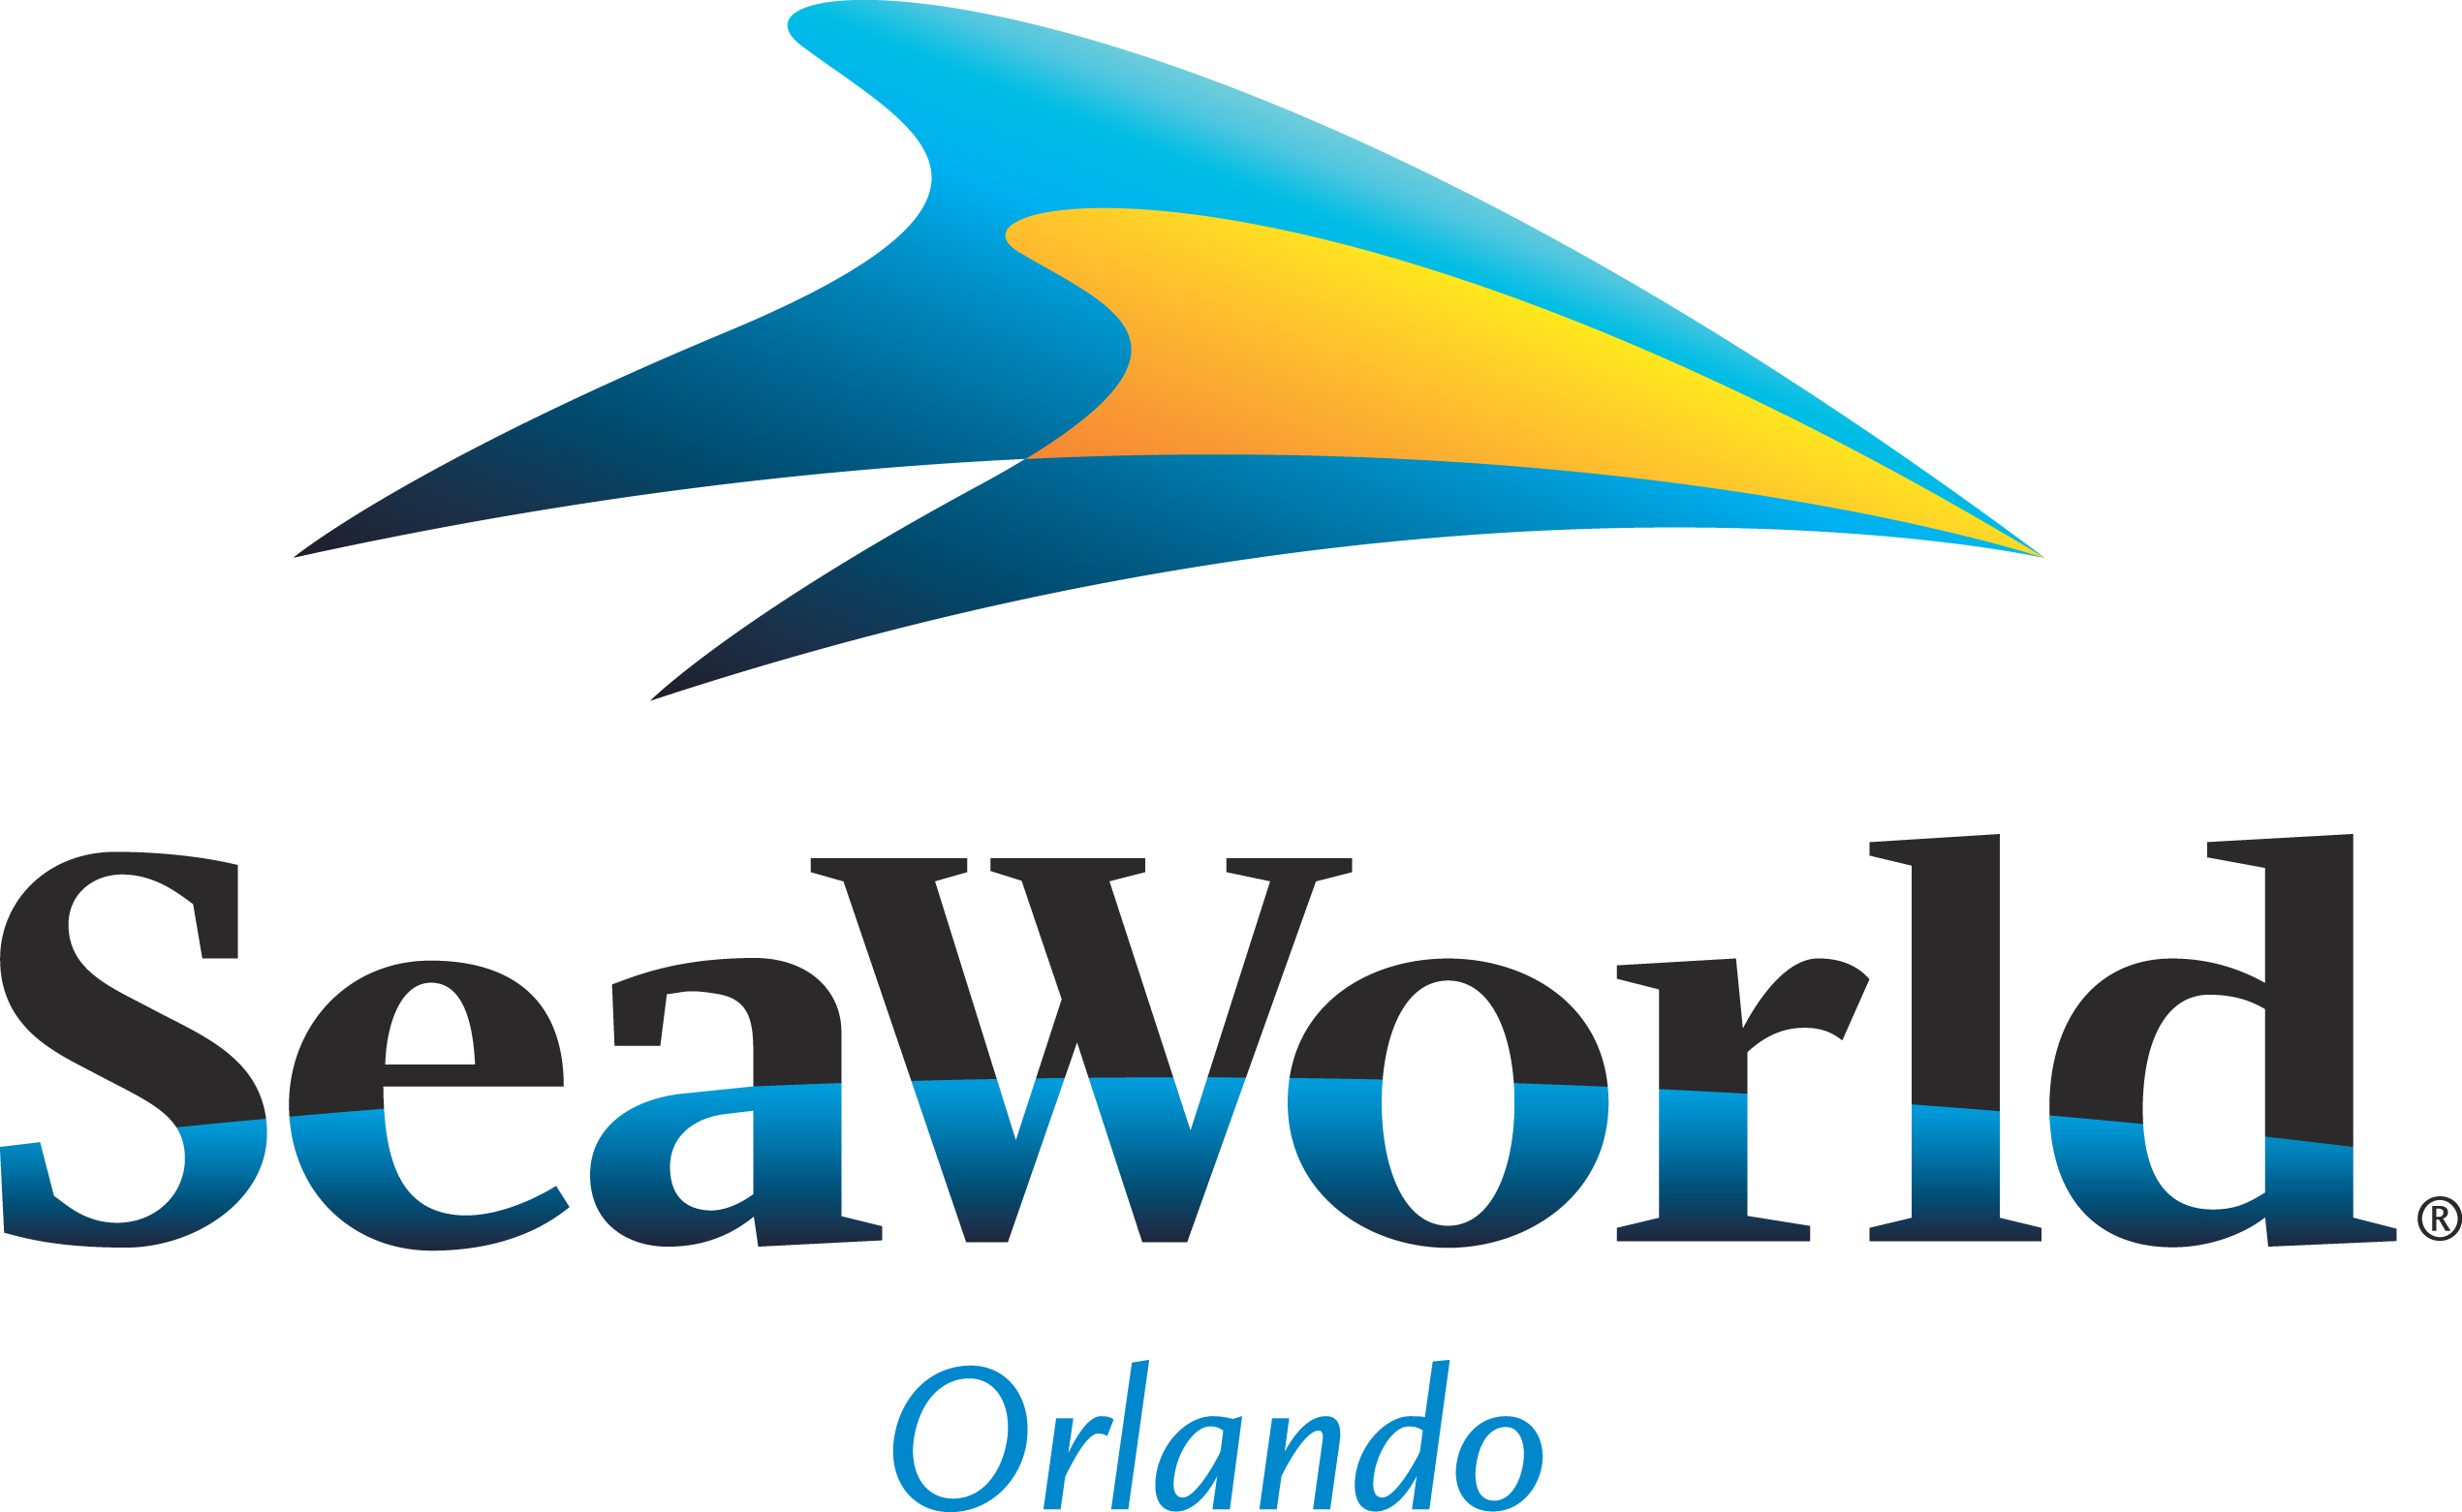 Sea World Orlando logo